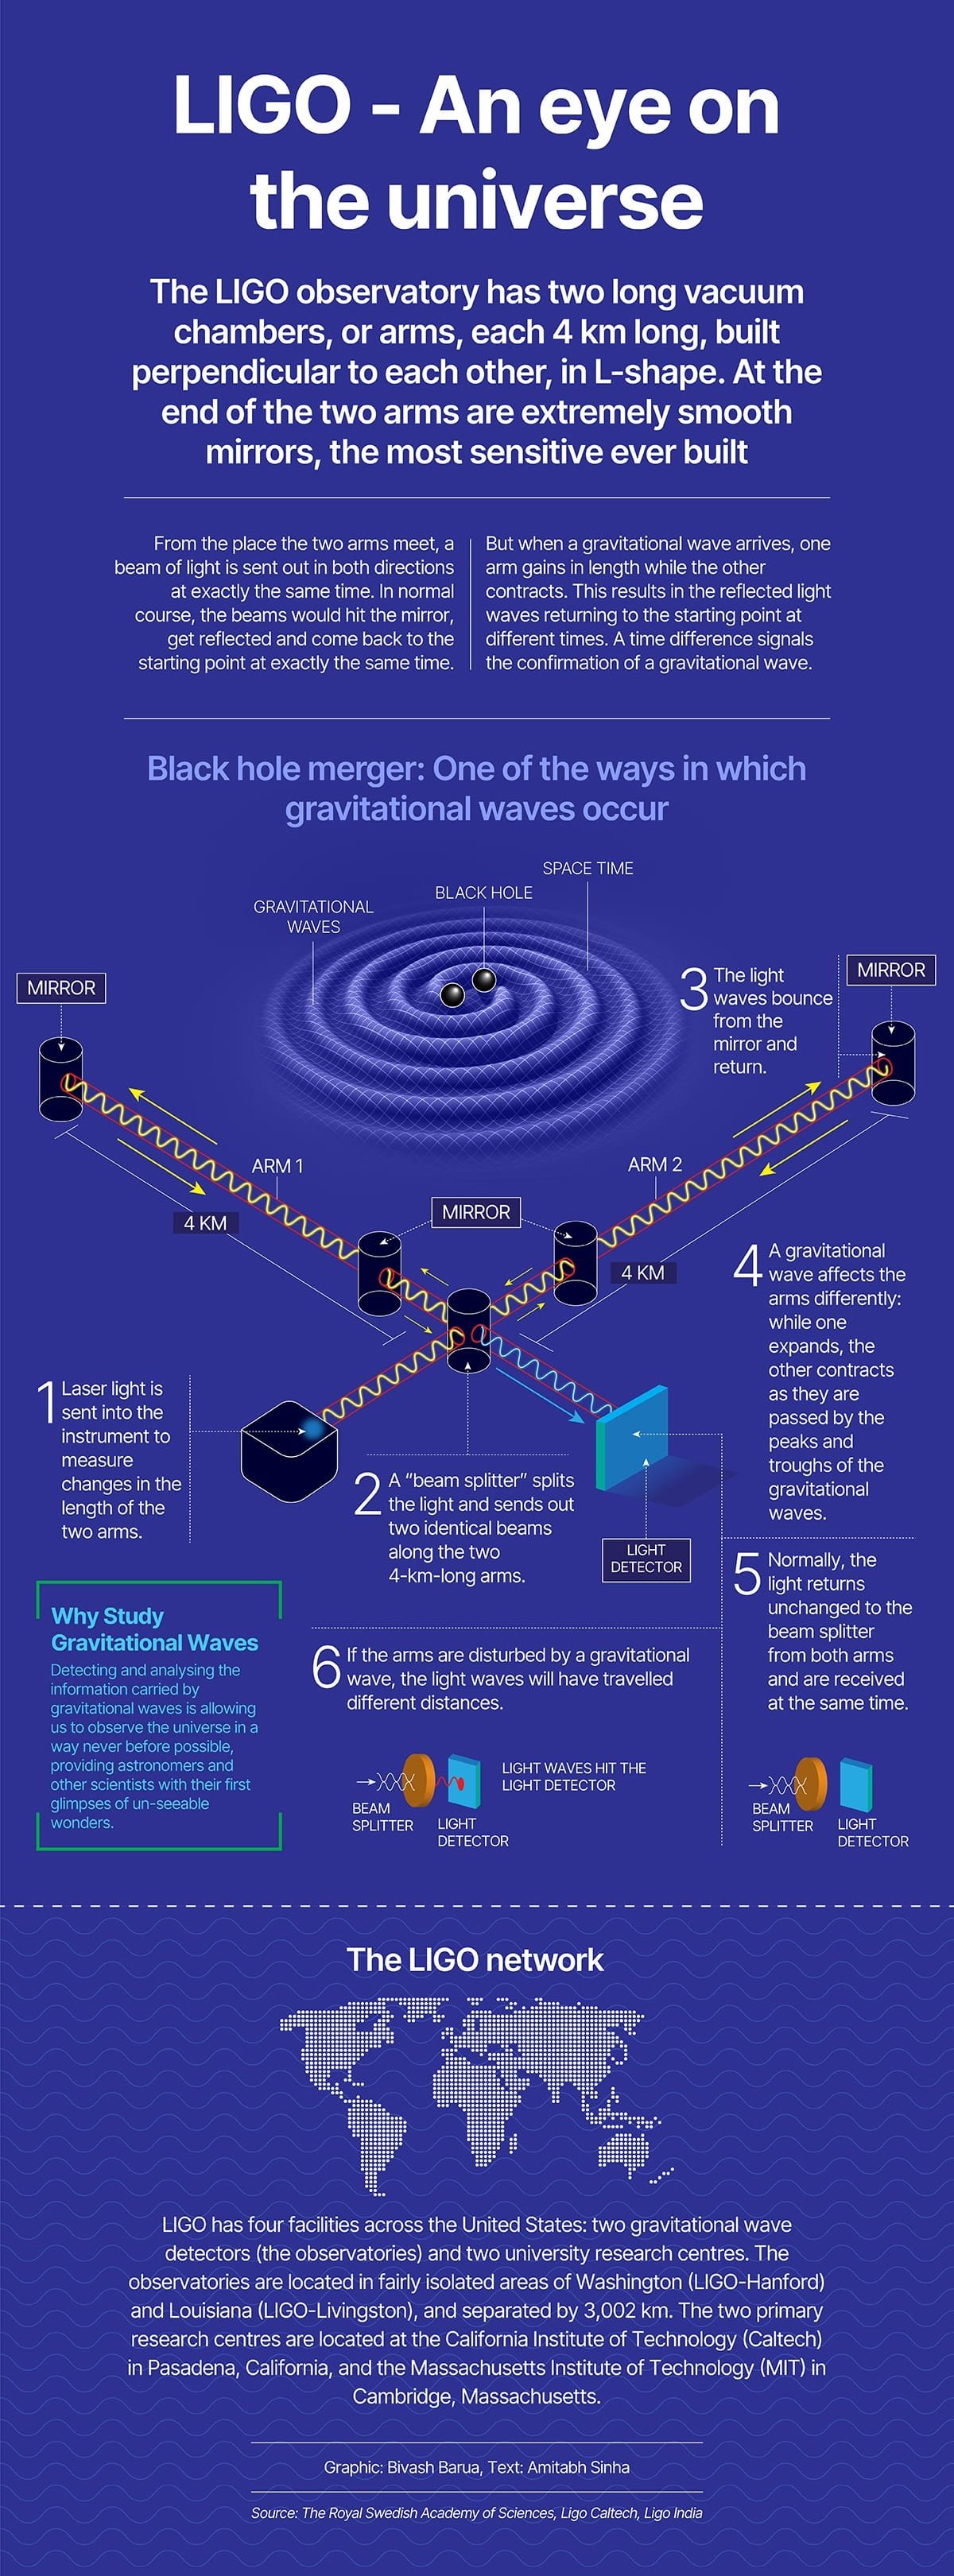 Laser Interferometer Gravitational Observatory (LIGO)